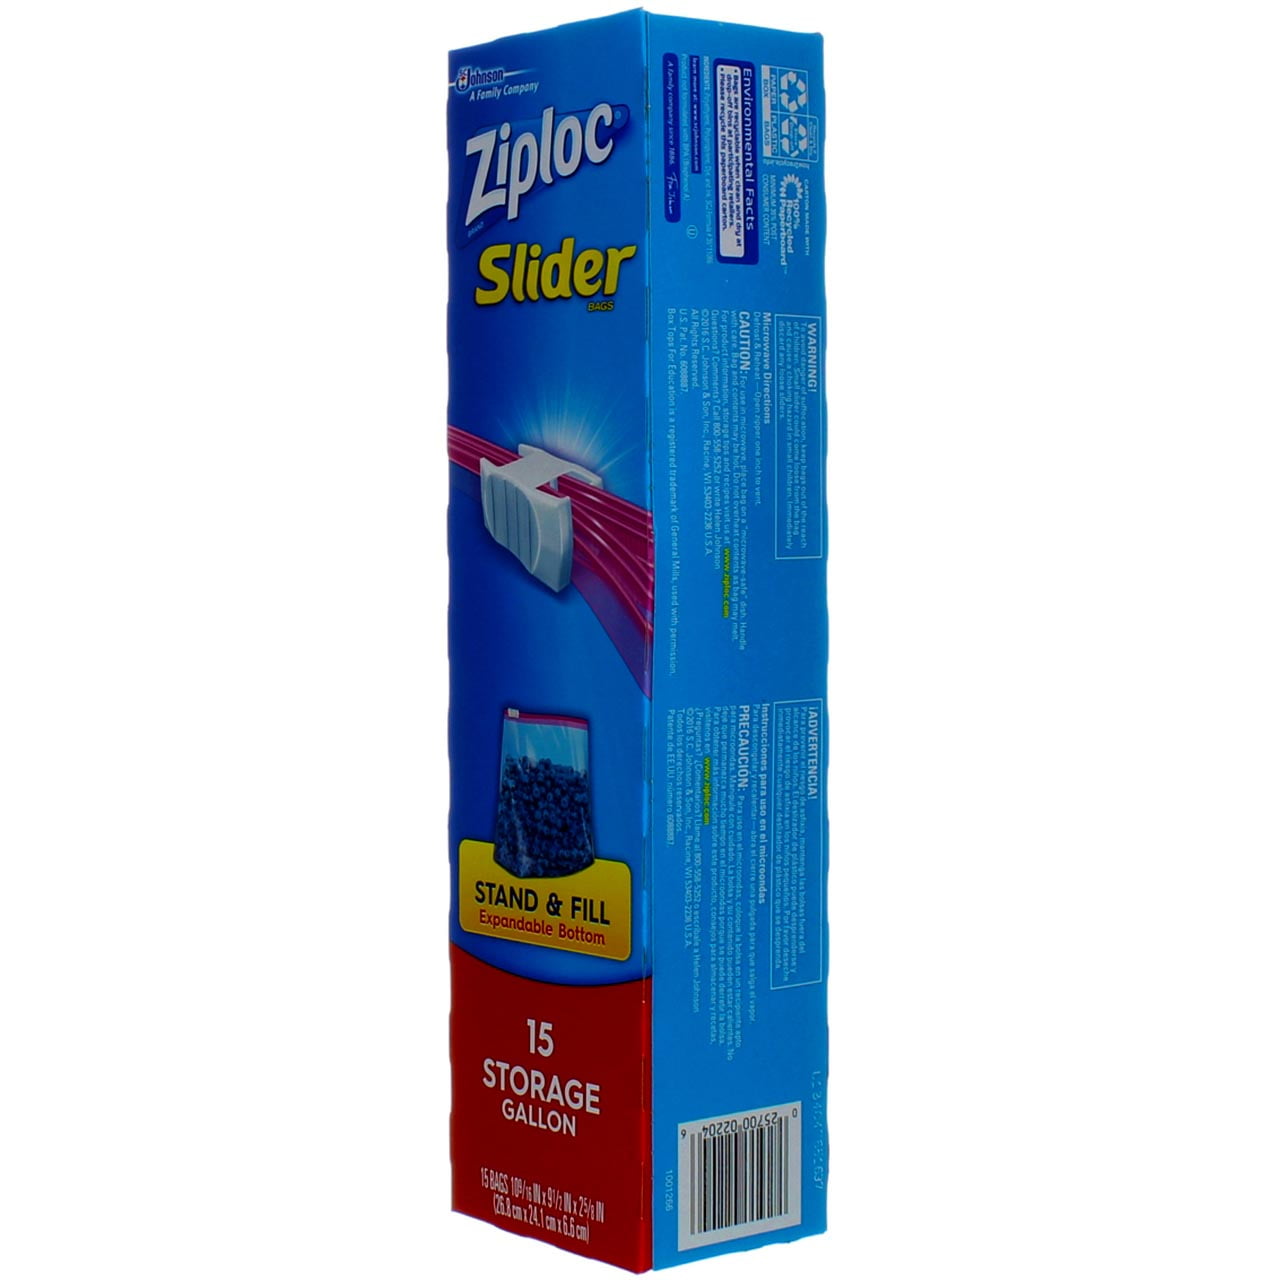 Ziploc 02204 Gallon Slide Stor Bag 15 Pack: Covered Storage Large